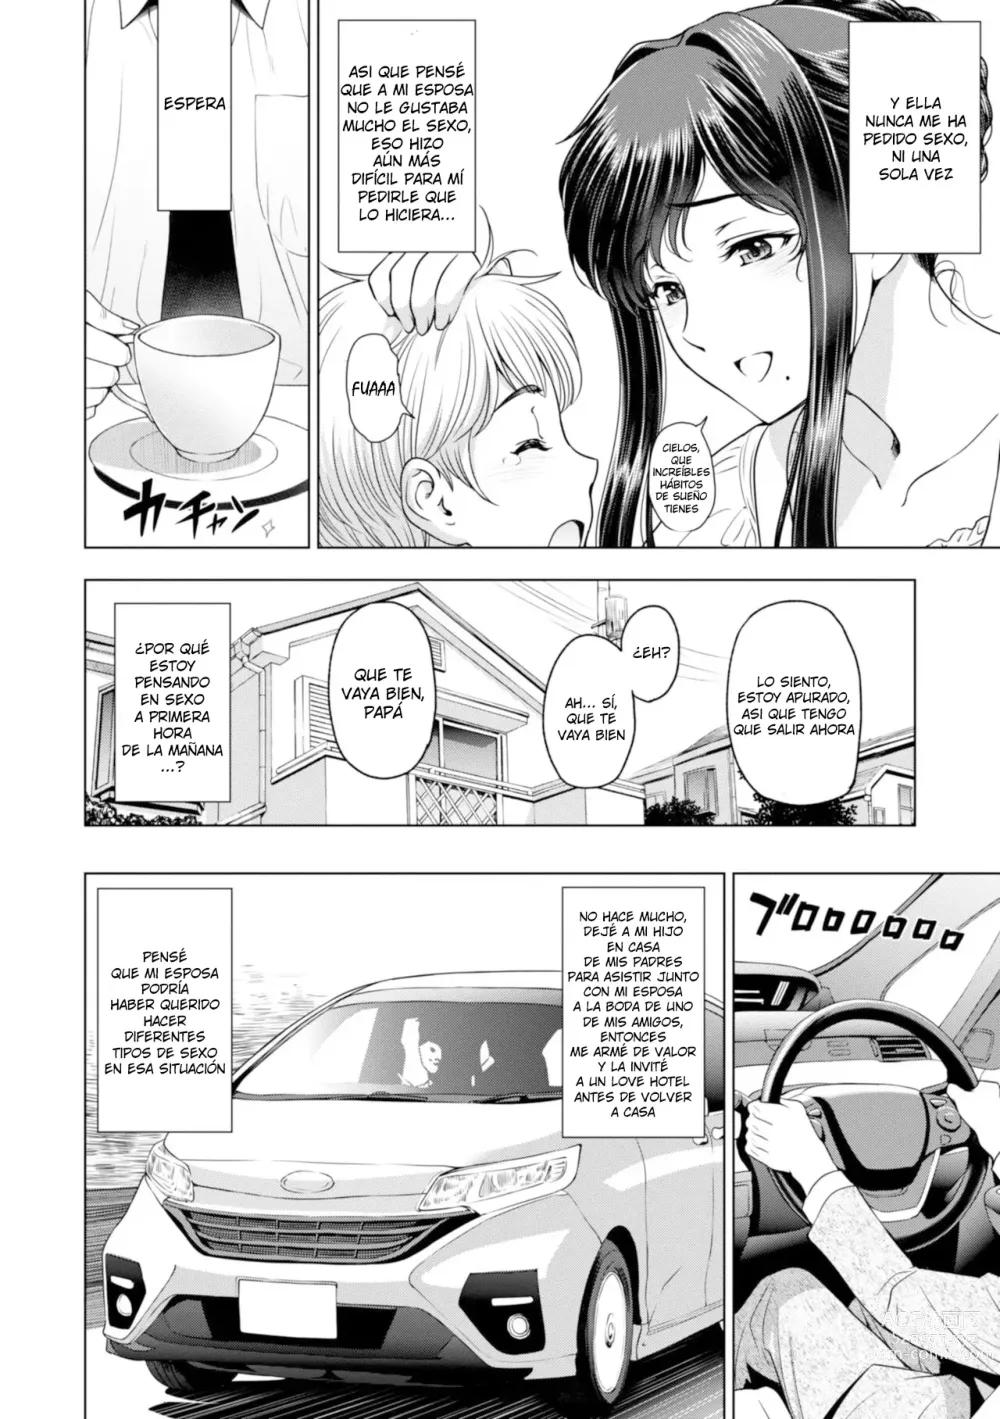 Page 4 of manga Nettori Netorare Ep.4 ~Esposa . El caso de Saori Sudou (epílogo)~